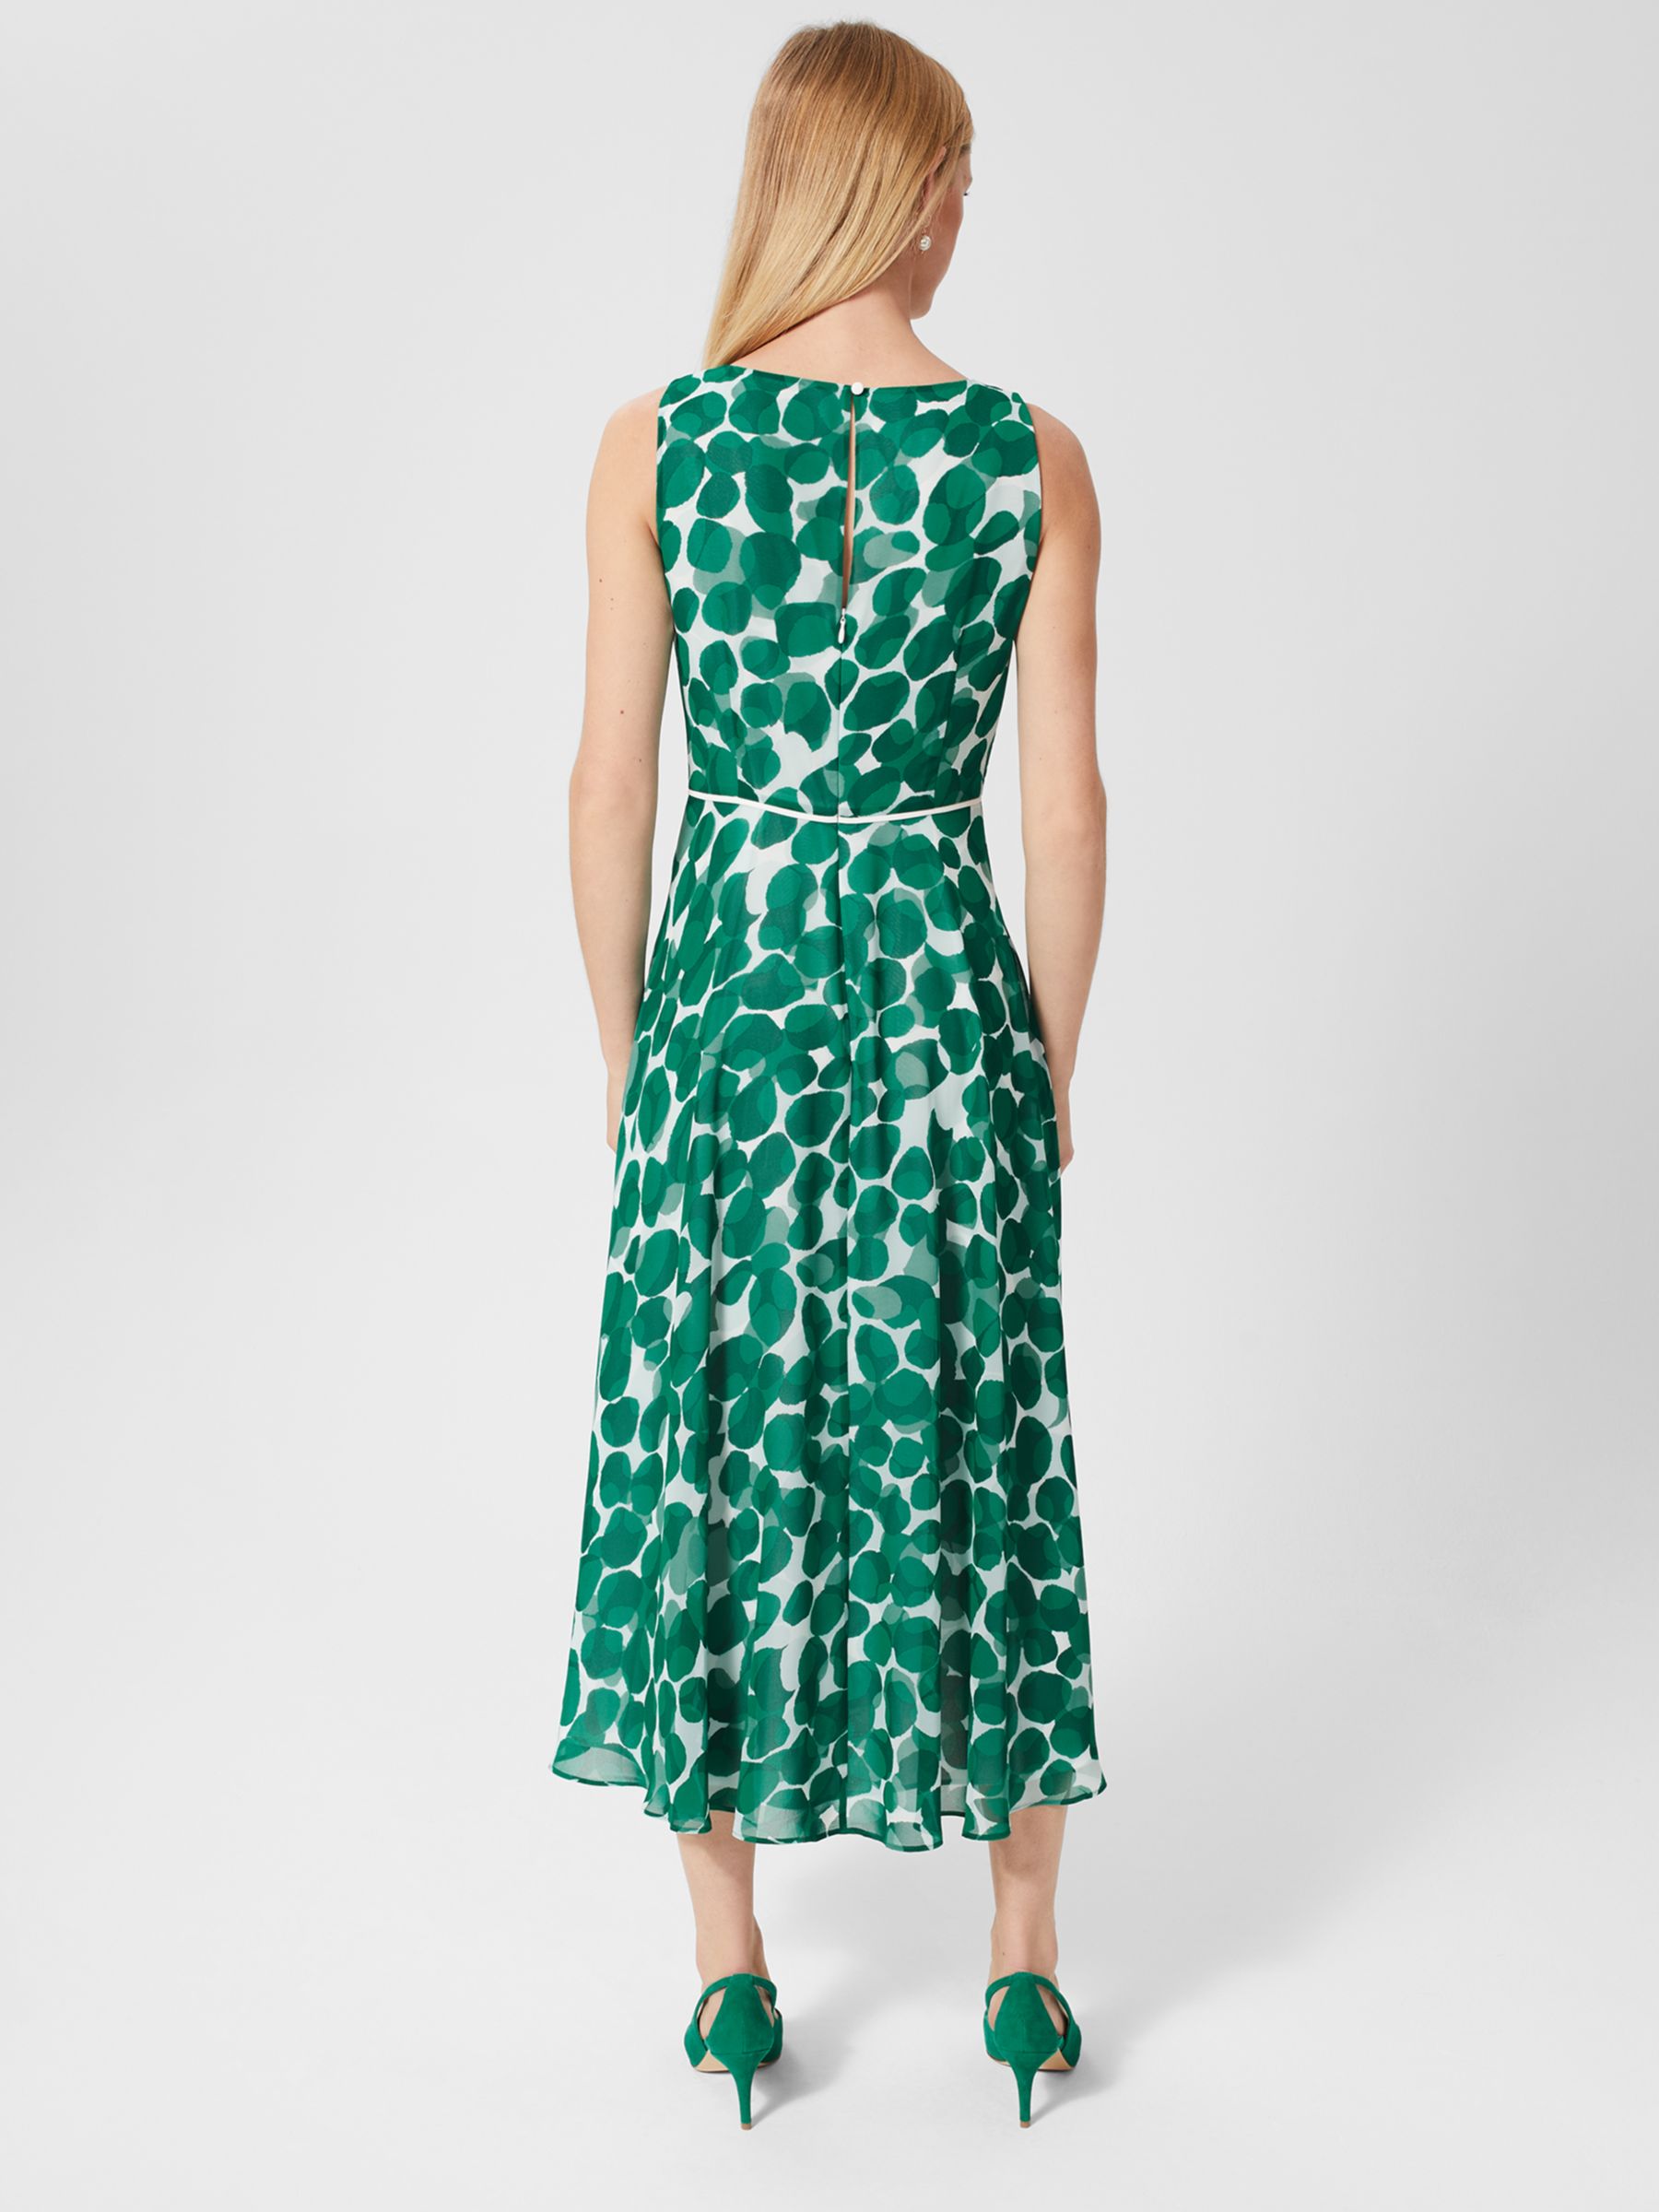 Hobbs Carly Abstract Spot Midi Dress, Green/Ivory